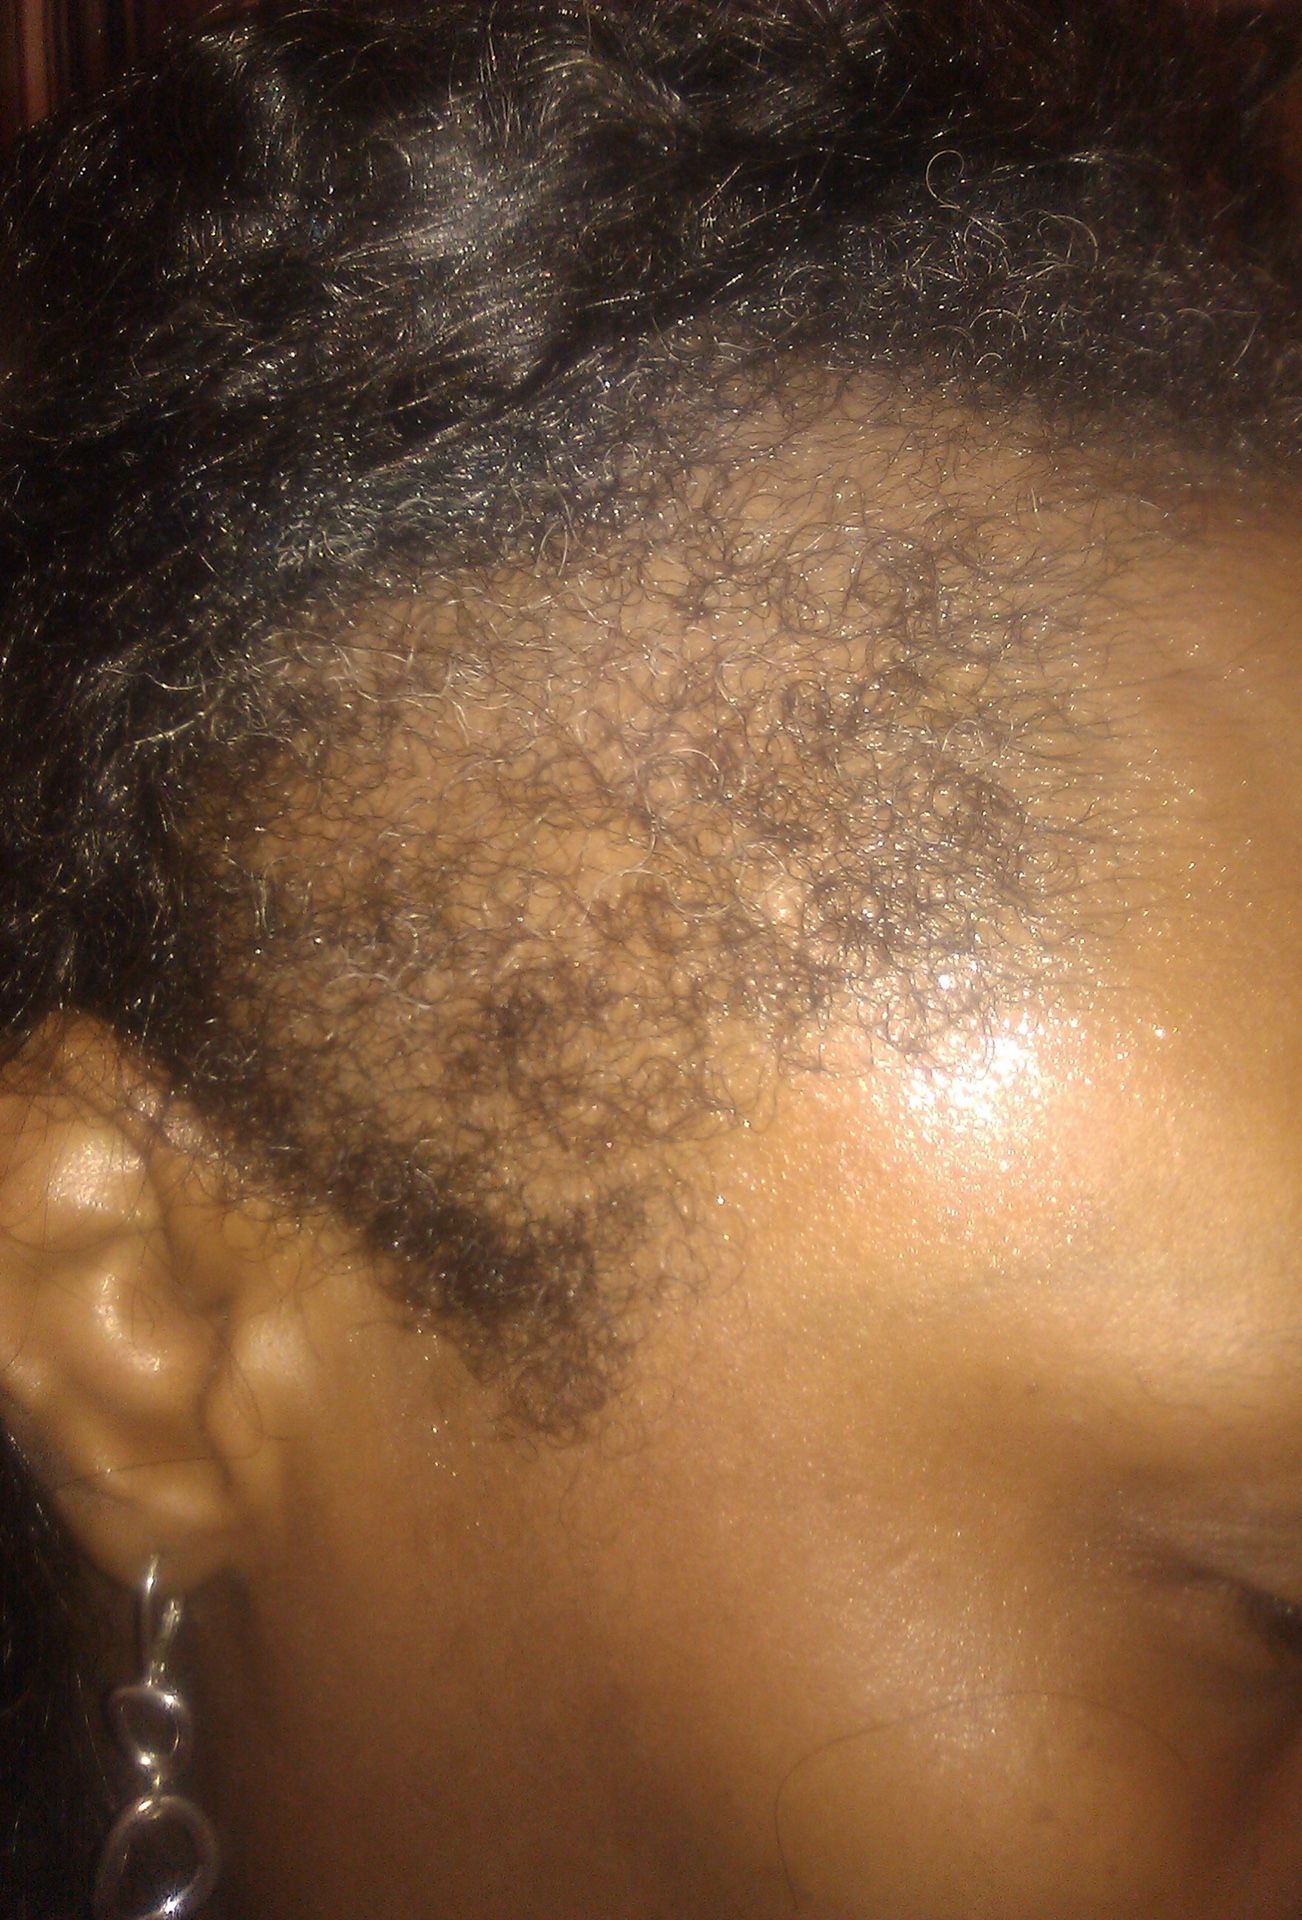 Repair and regrow damaged hair with Hair2Toe